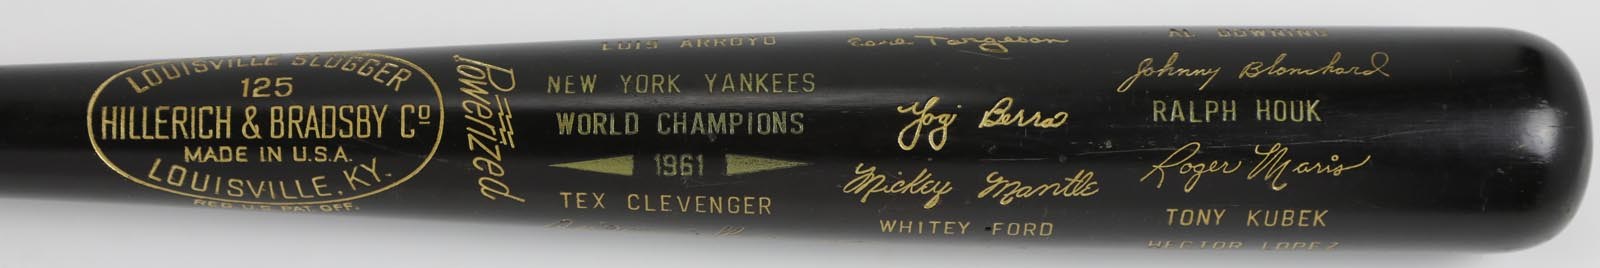 Mantle and Maris - 1961 New York Yankees World Champions Commemorative Bat